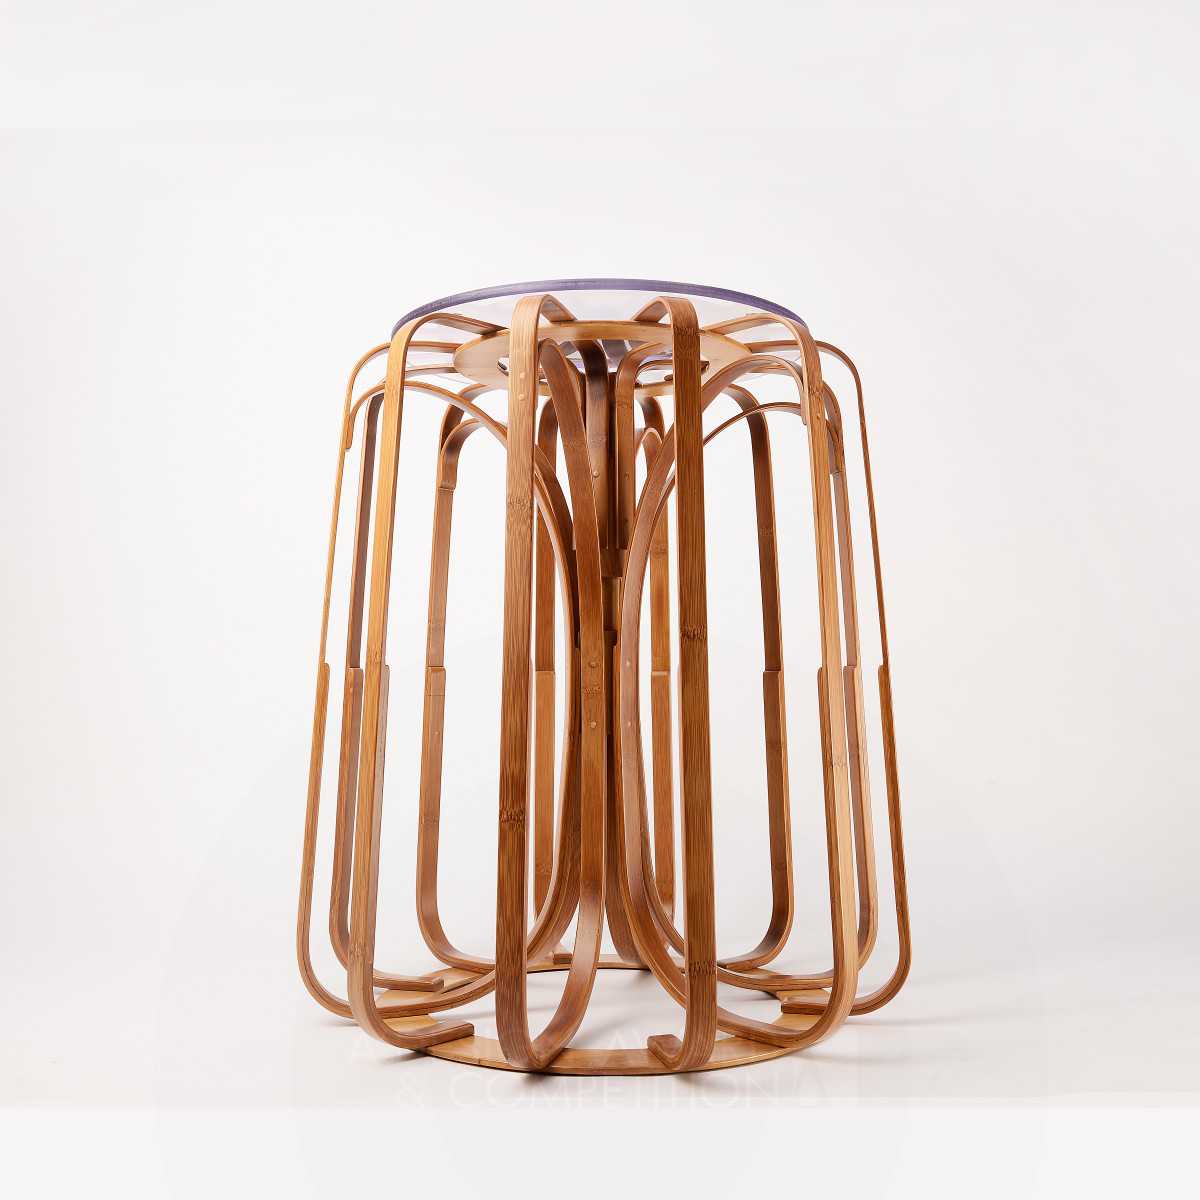 Kala Laminated Bamboo Retractable Stool by Chung-Sheng Chen, Chung-Yen Wang and Yi-Lin Wu Silver Furniture Design Award Winner 2017 